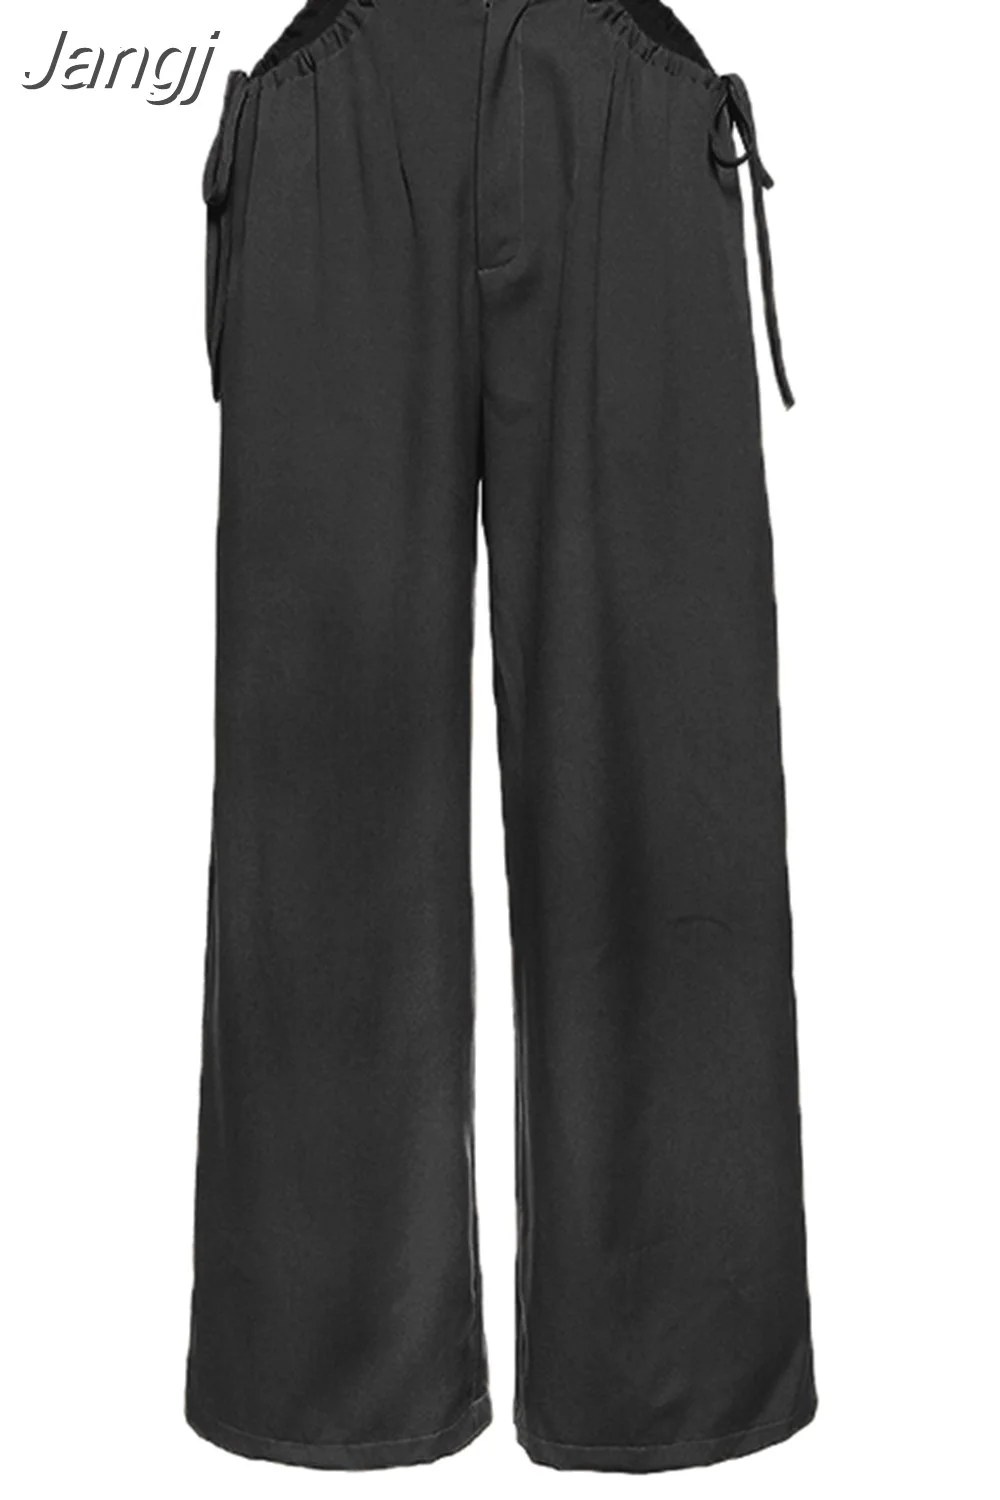 Jangj high waist hollow out tassel Straight pants 2023 female fashion street casual wear harajuku Khaki cargo pants women